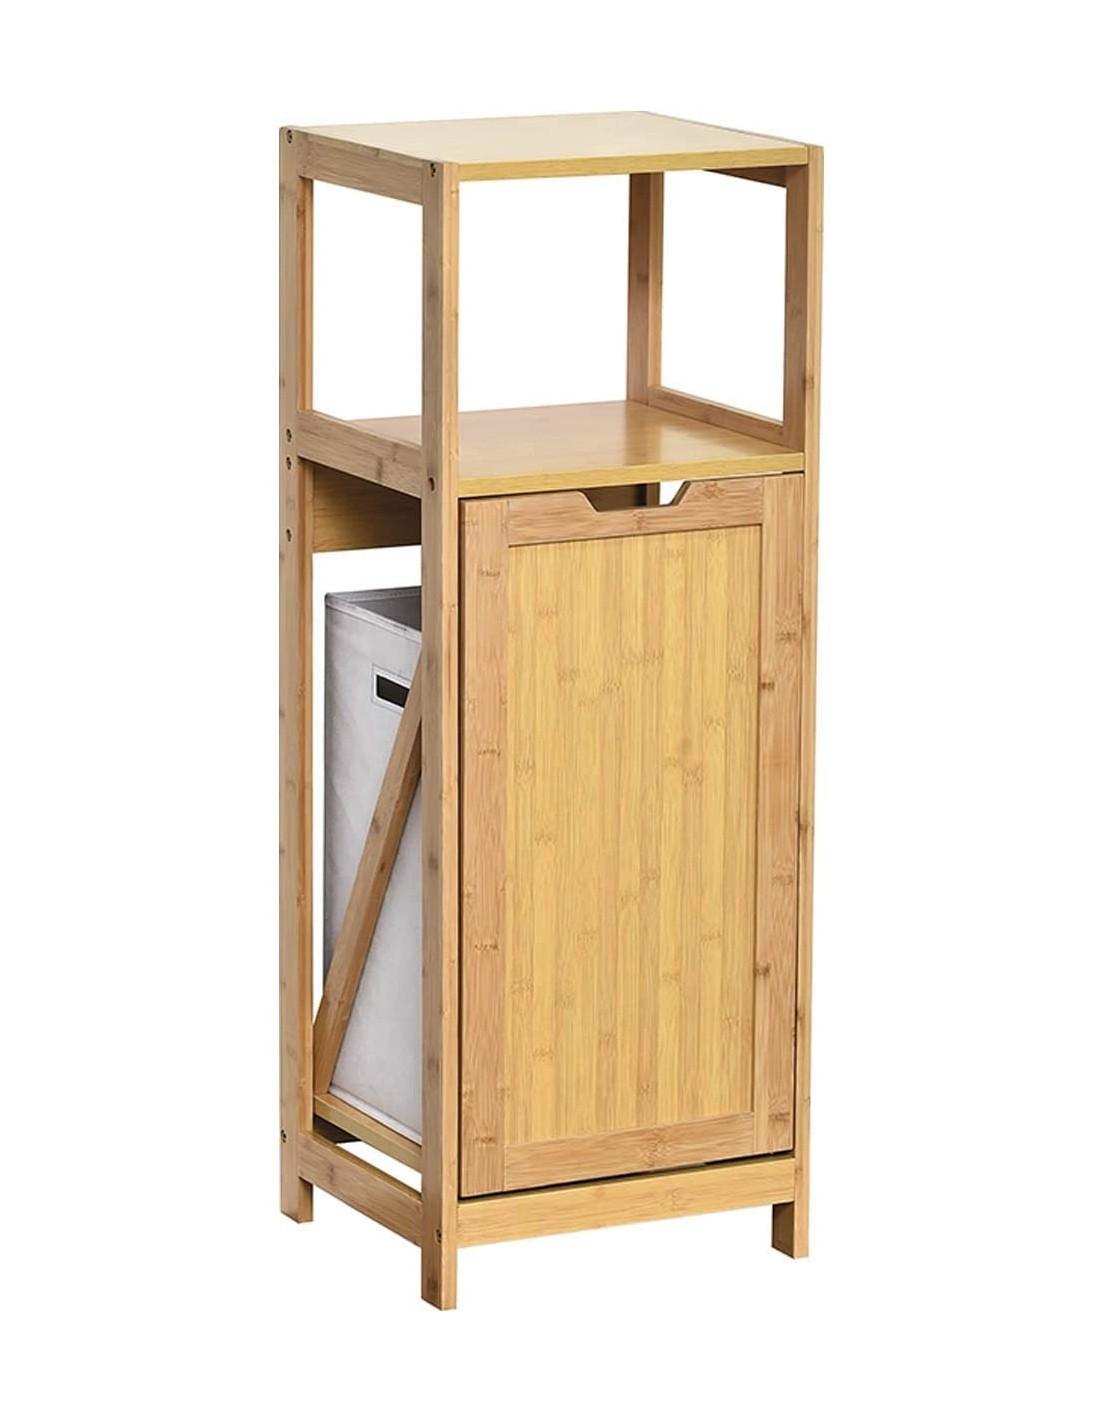 https://hanselhome.com/24557-thickbox_default/mueble-con-cesto-para-ropa-sucia-mueble-bano-madera-y-bambu-36x33x98-cm.jpg